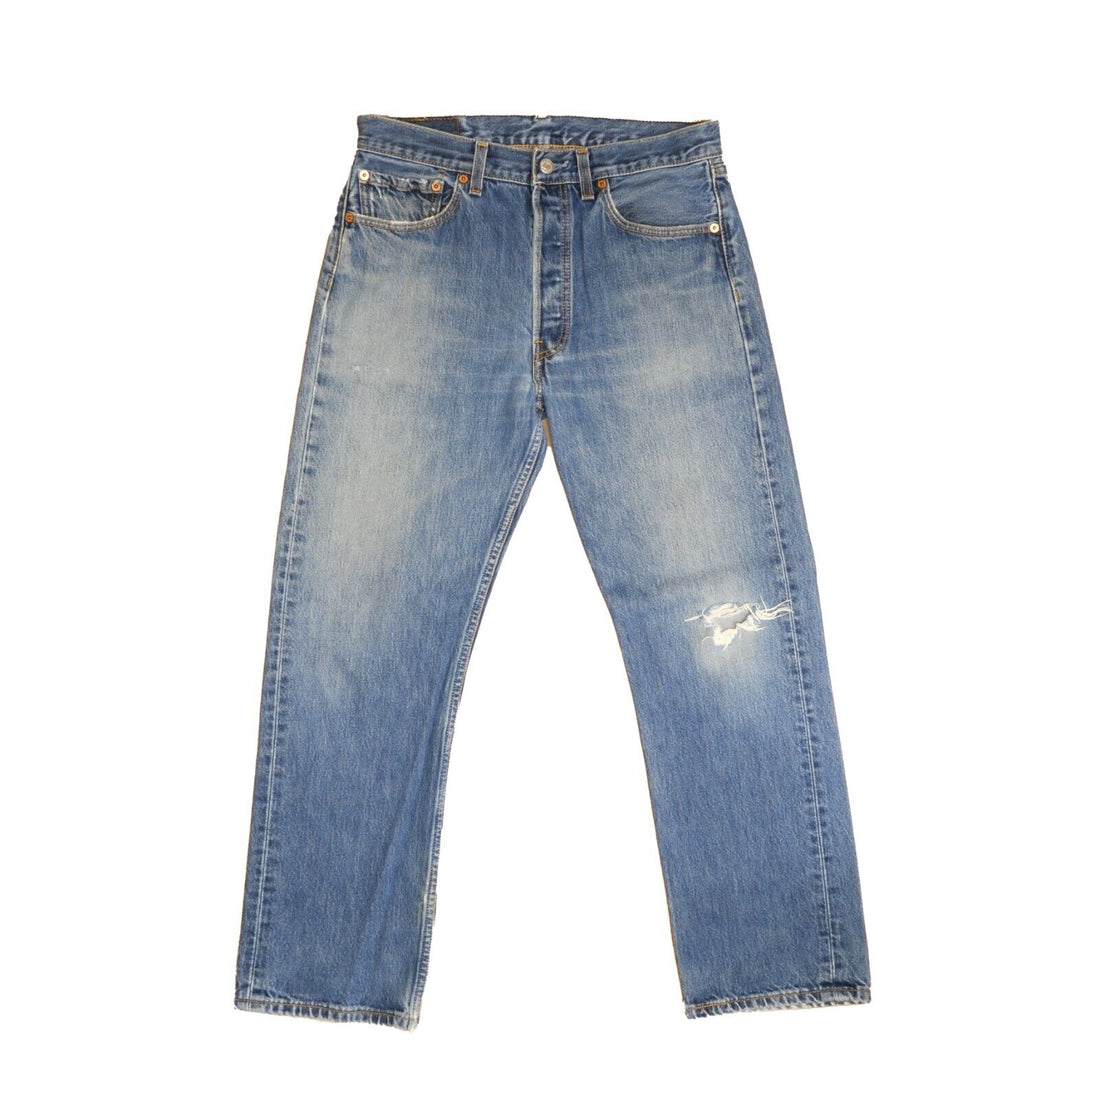 Vintage Levi Strauss & Co 501 Denim Jeans Size 32 X 30 501 0105